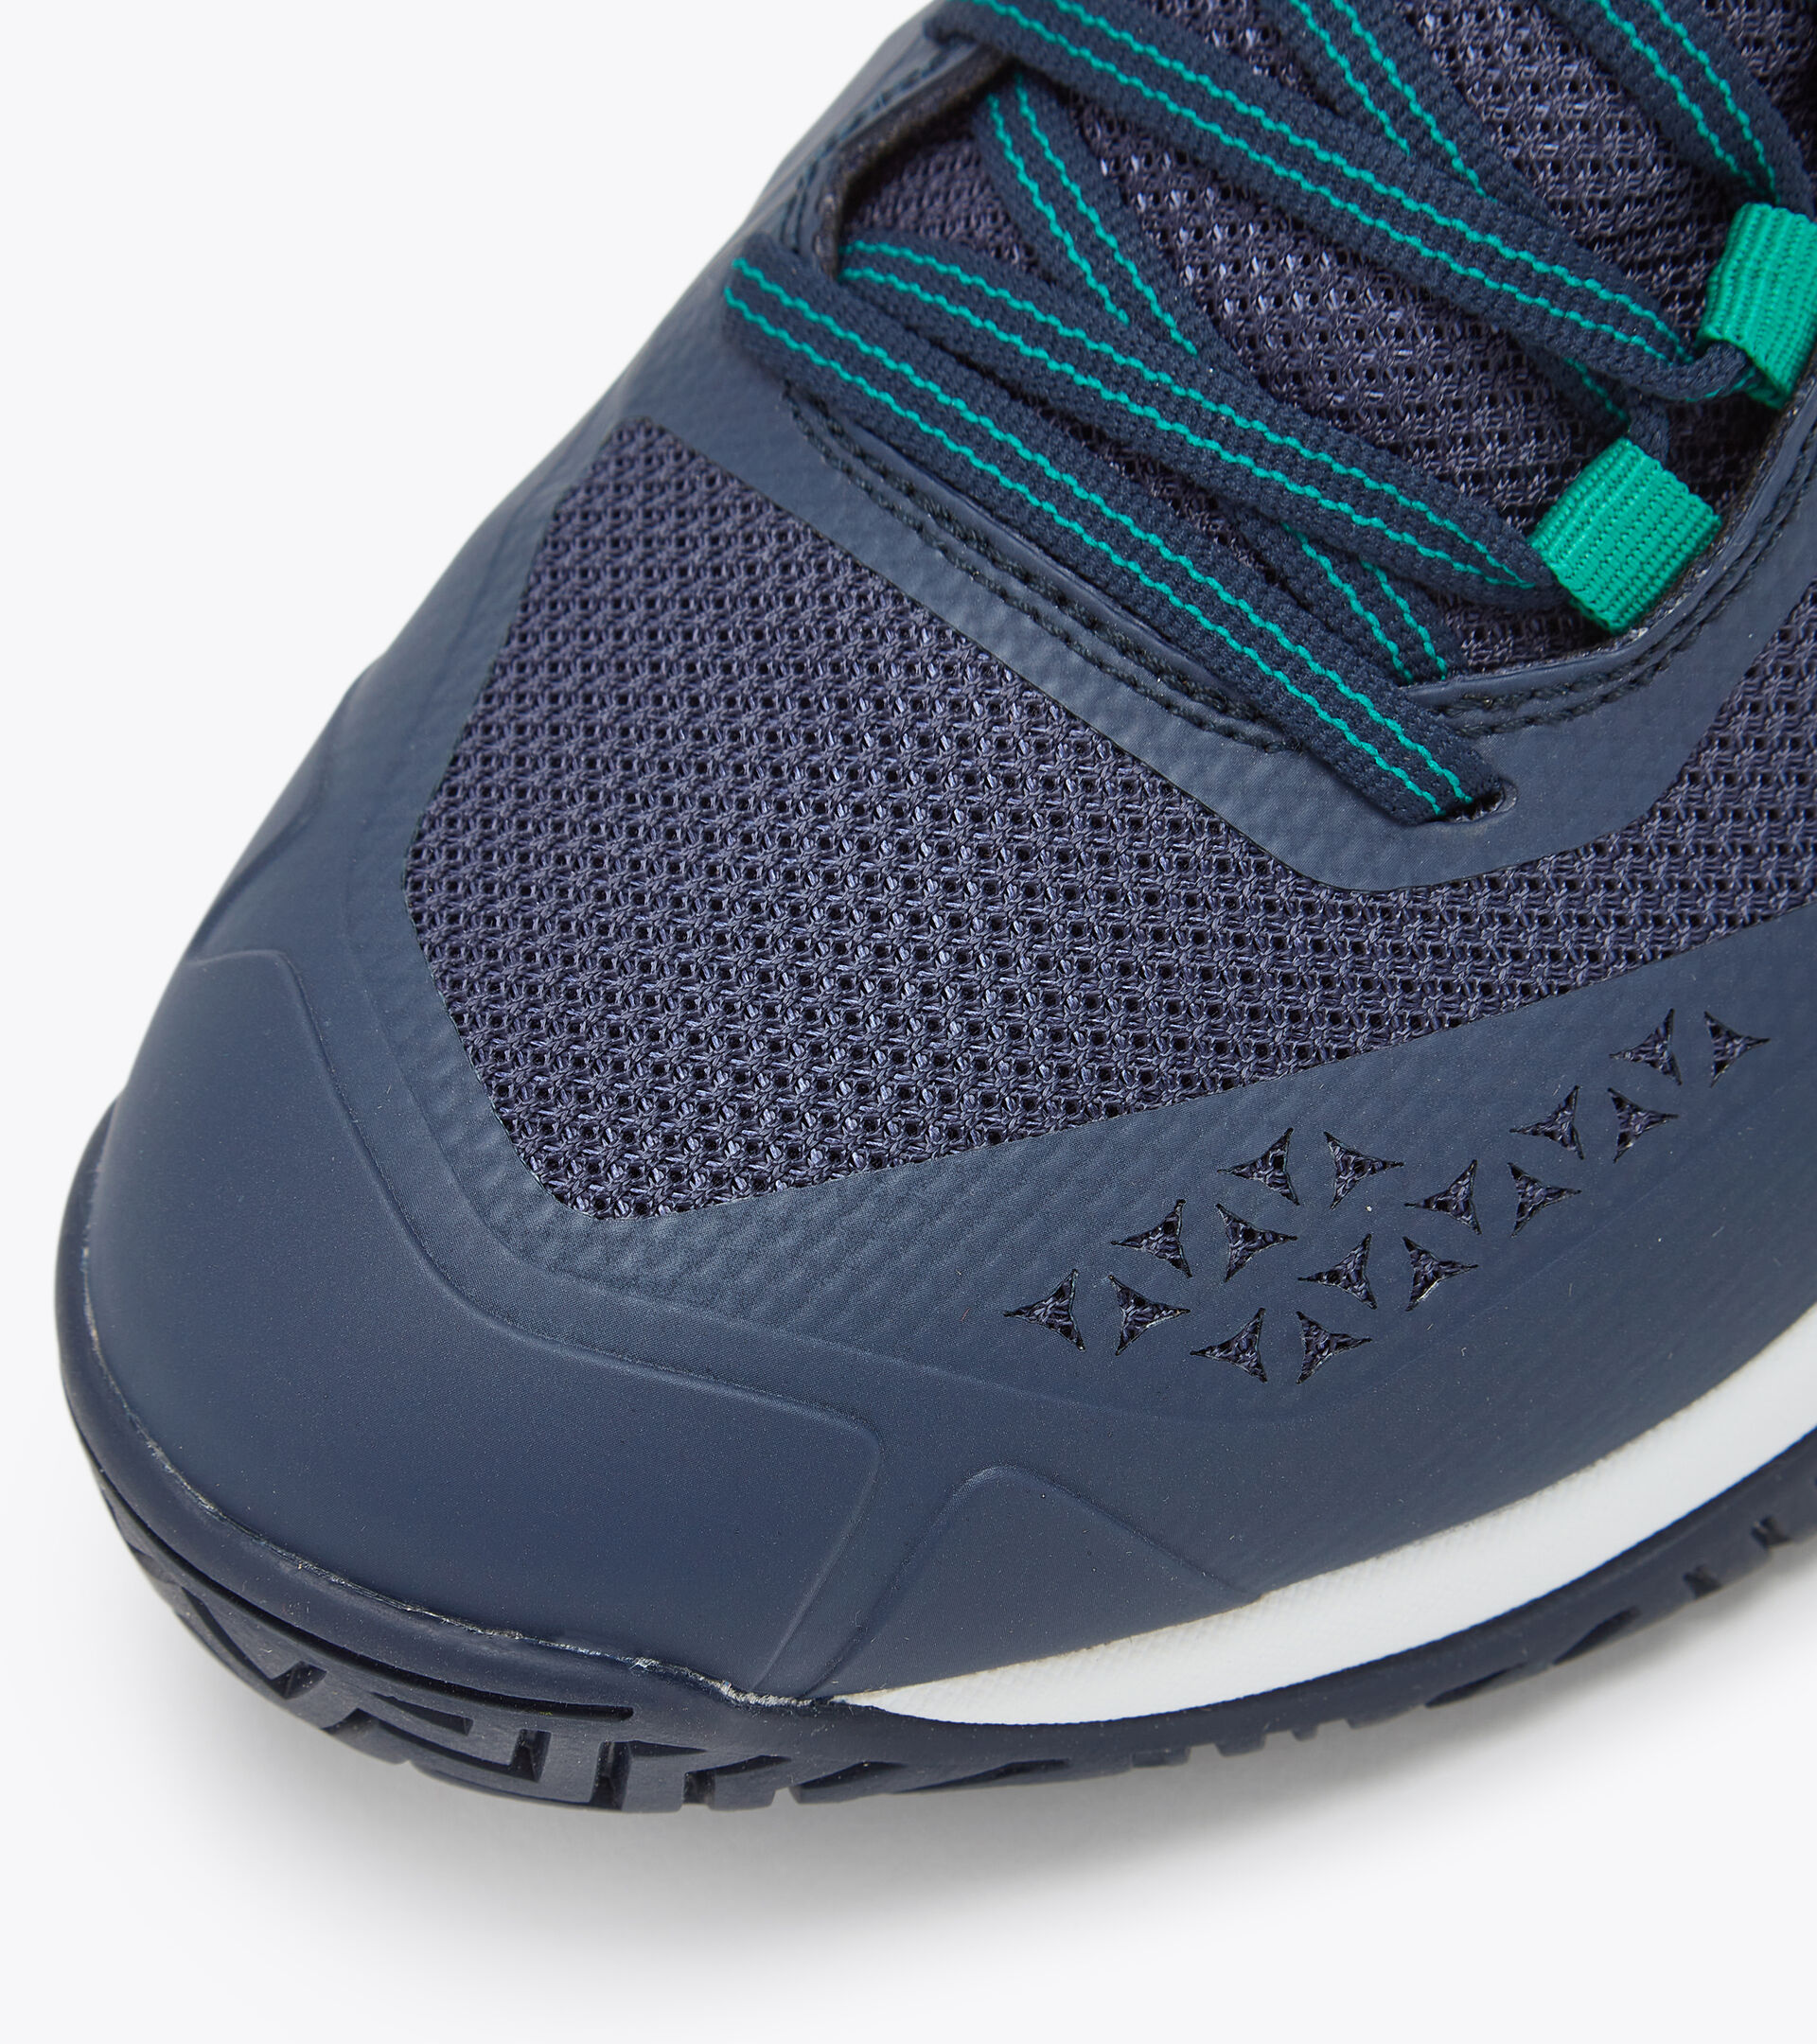 Tennis shoes for hard surfaces or clay - Men BLUSHIELD TORNEO 2 AG BLUE CORSAIR/WHITE - Diadora